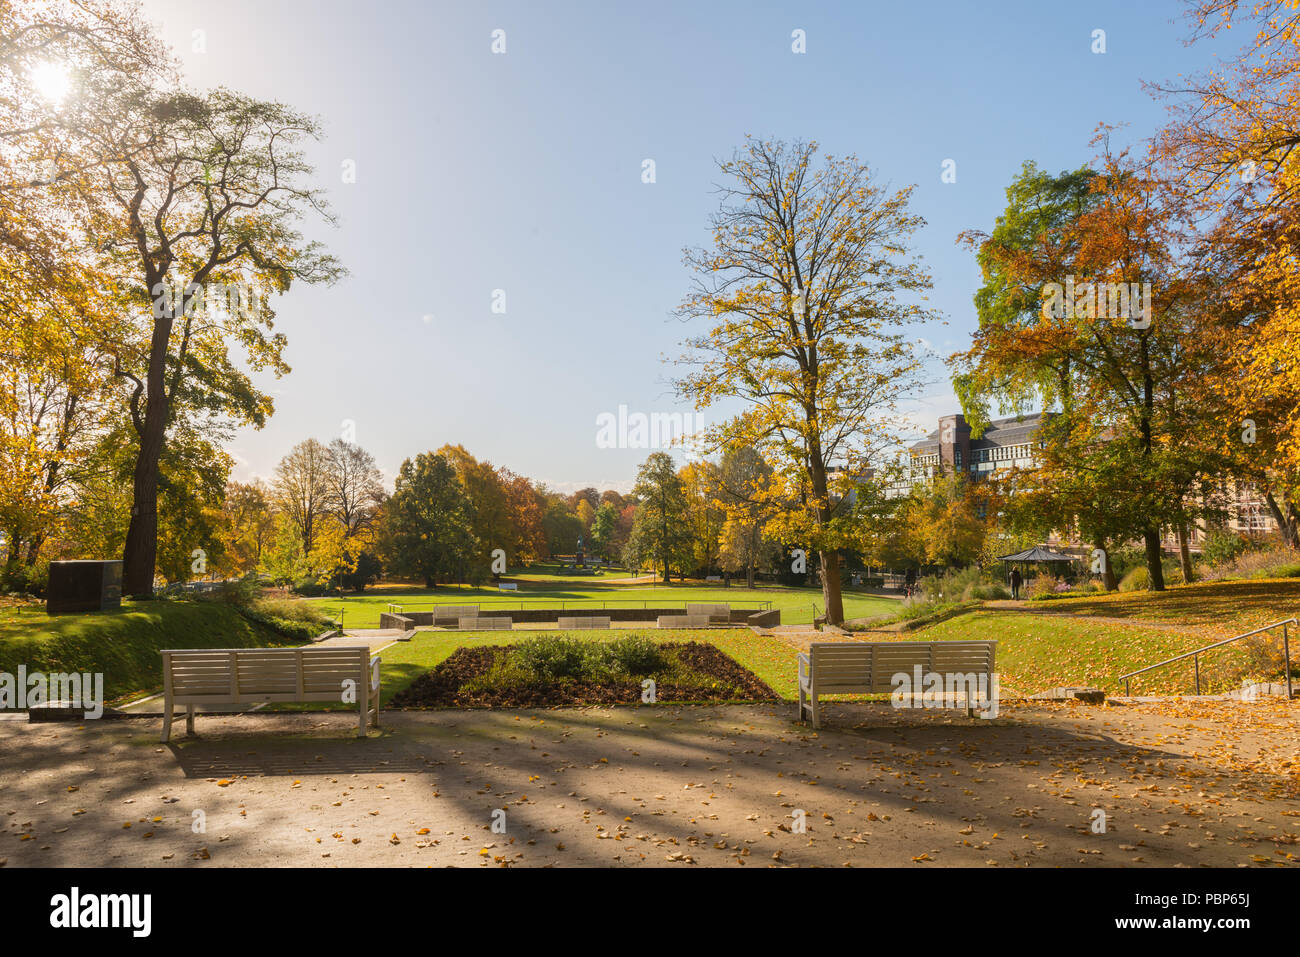 Schlossgarten ou Castle Garden, automne, feuillage d'automne, Kiel, capitale du Schleswig-Holstein, Allemagne, Europe Banque D'Images